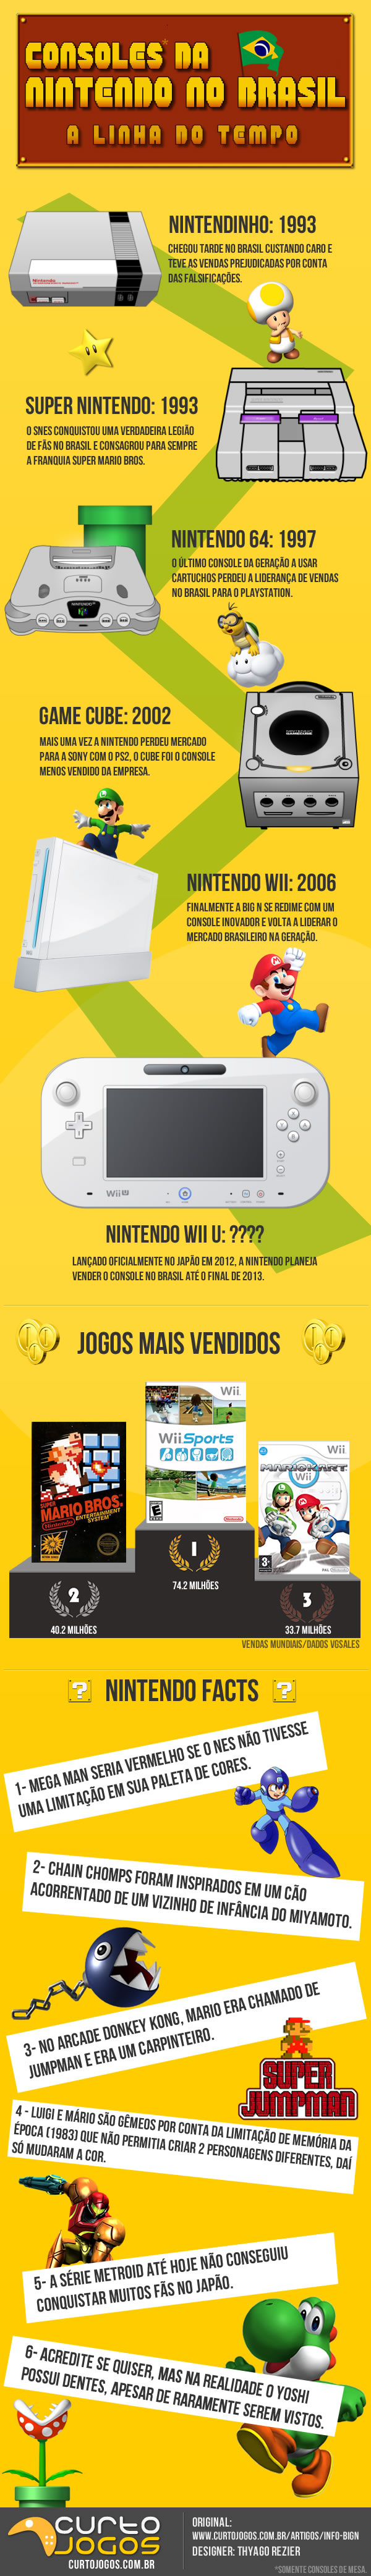 Infográfico Nintendo no Brasil